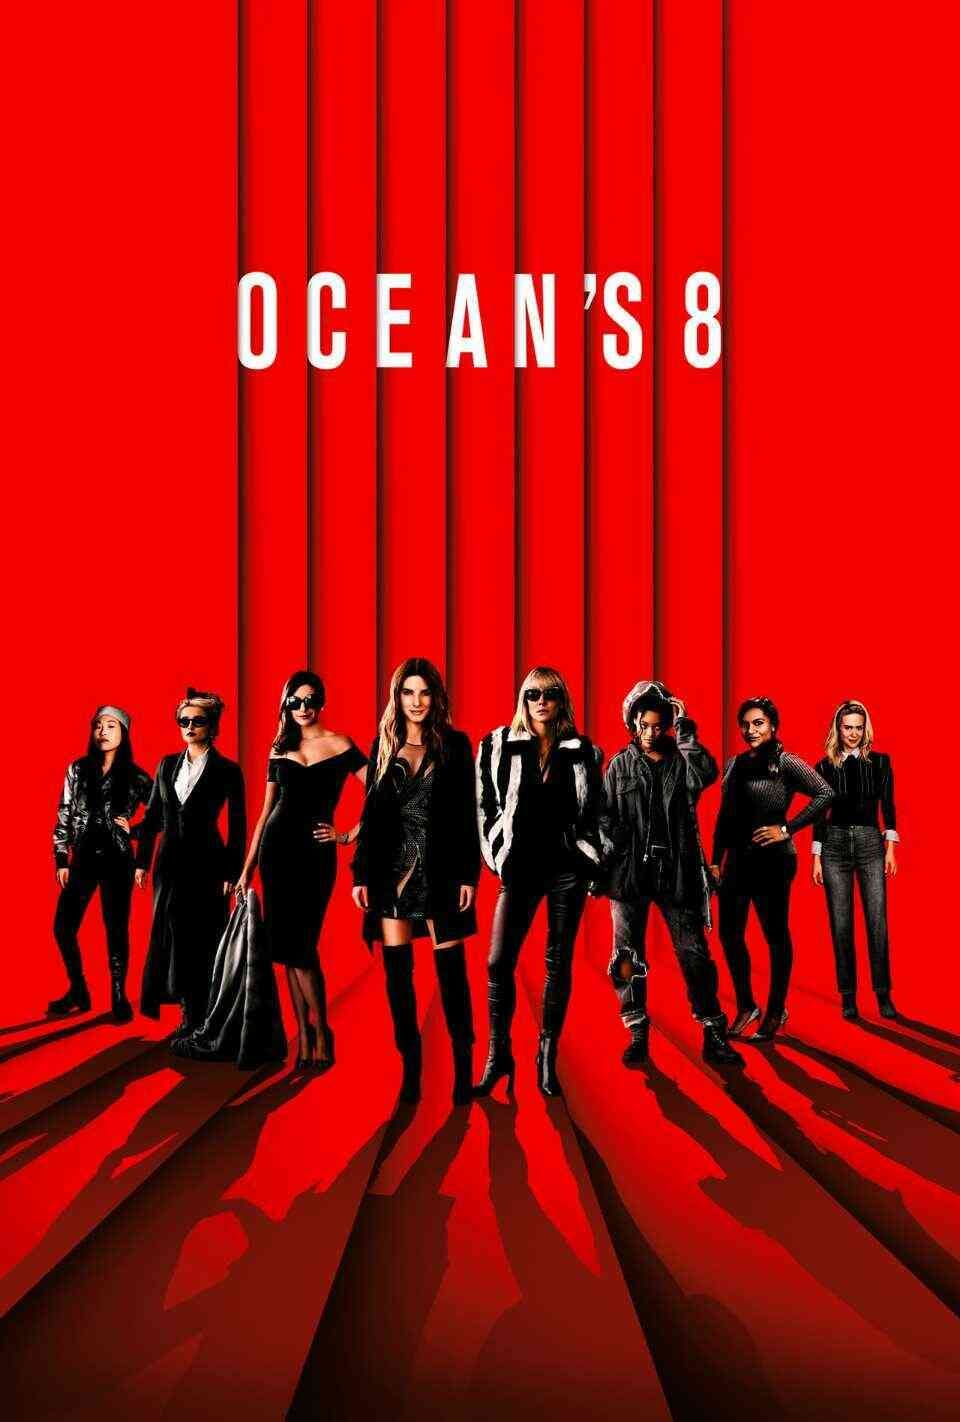 Read Ocean's 8 screenplay.